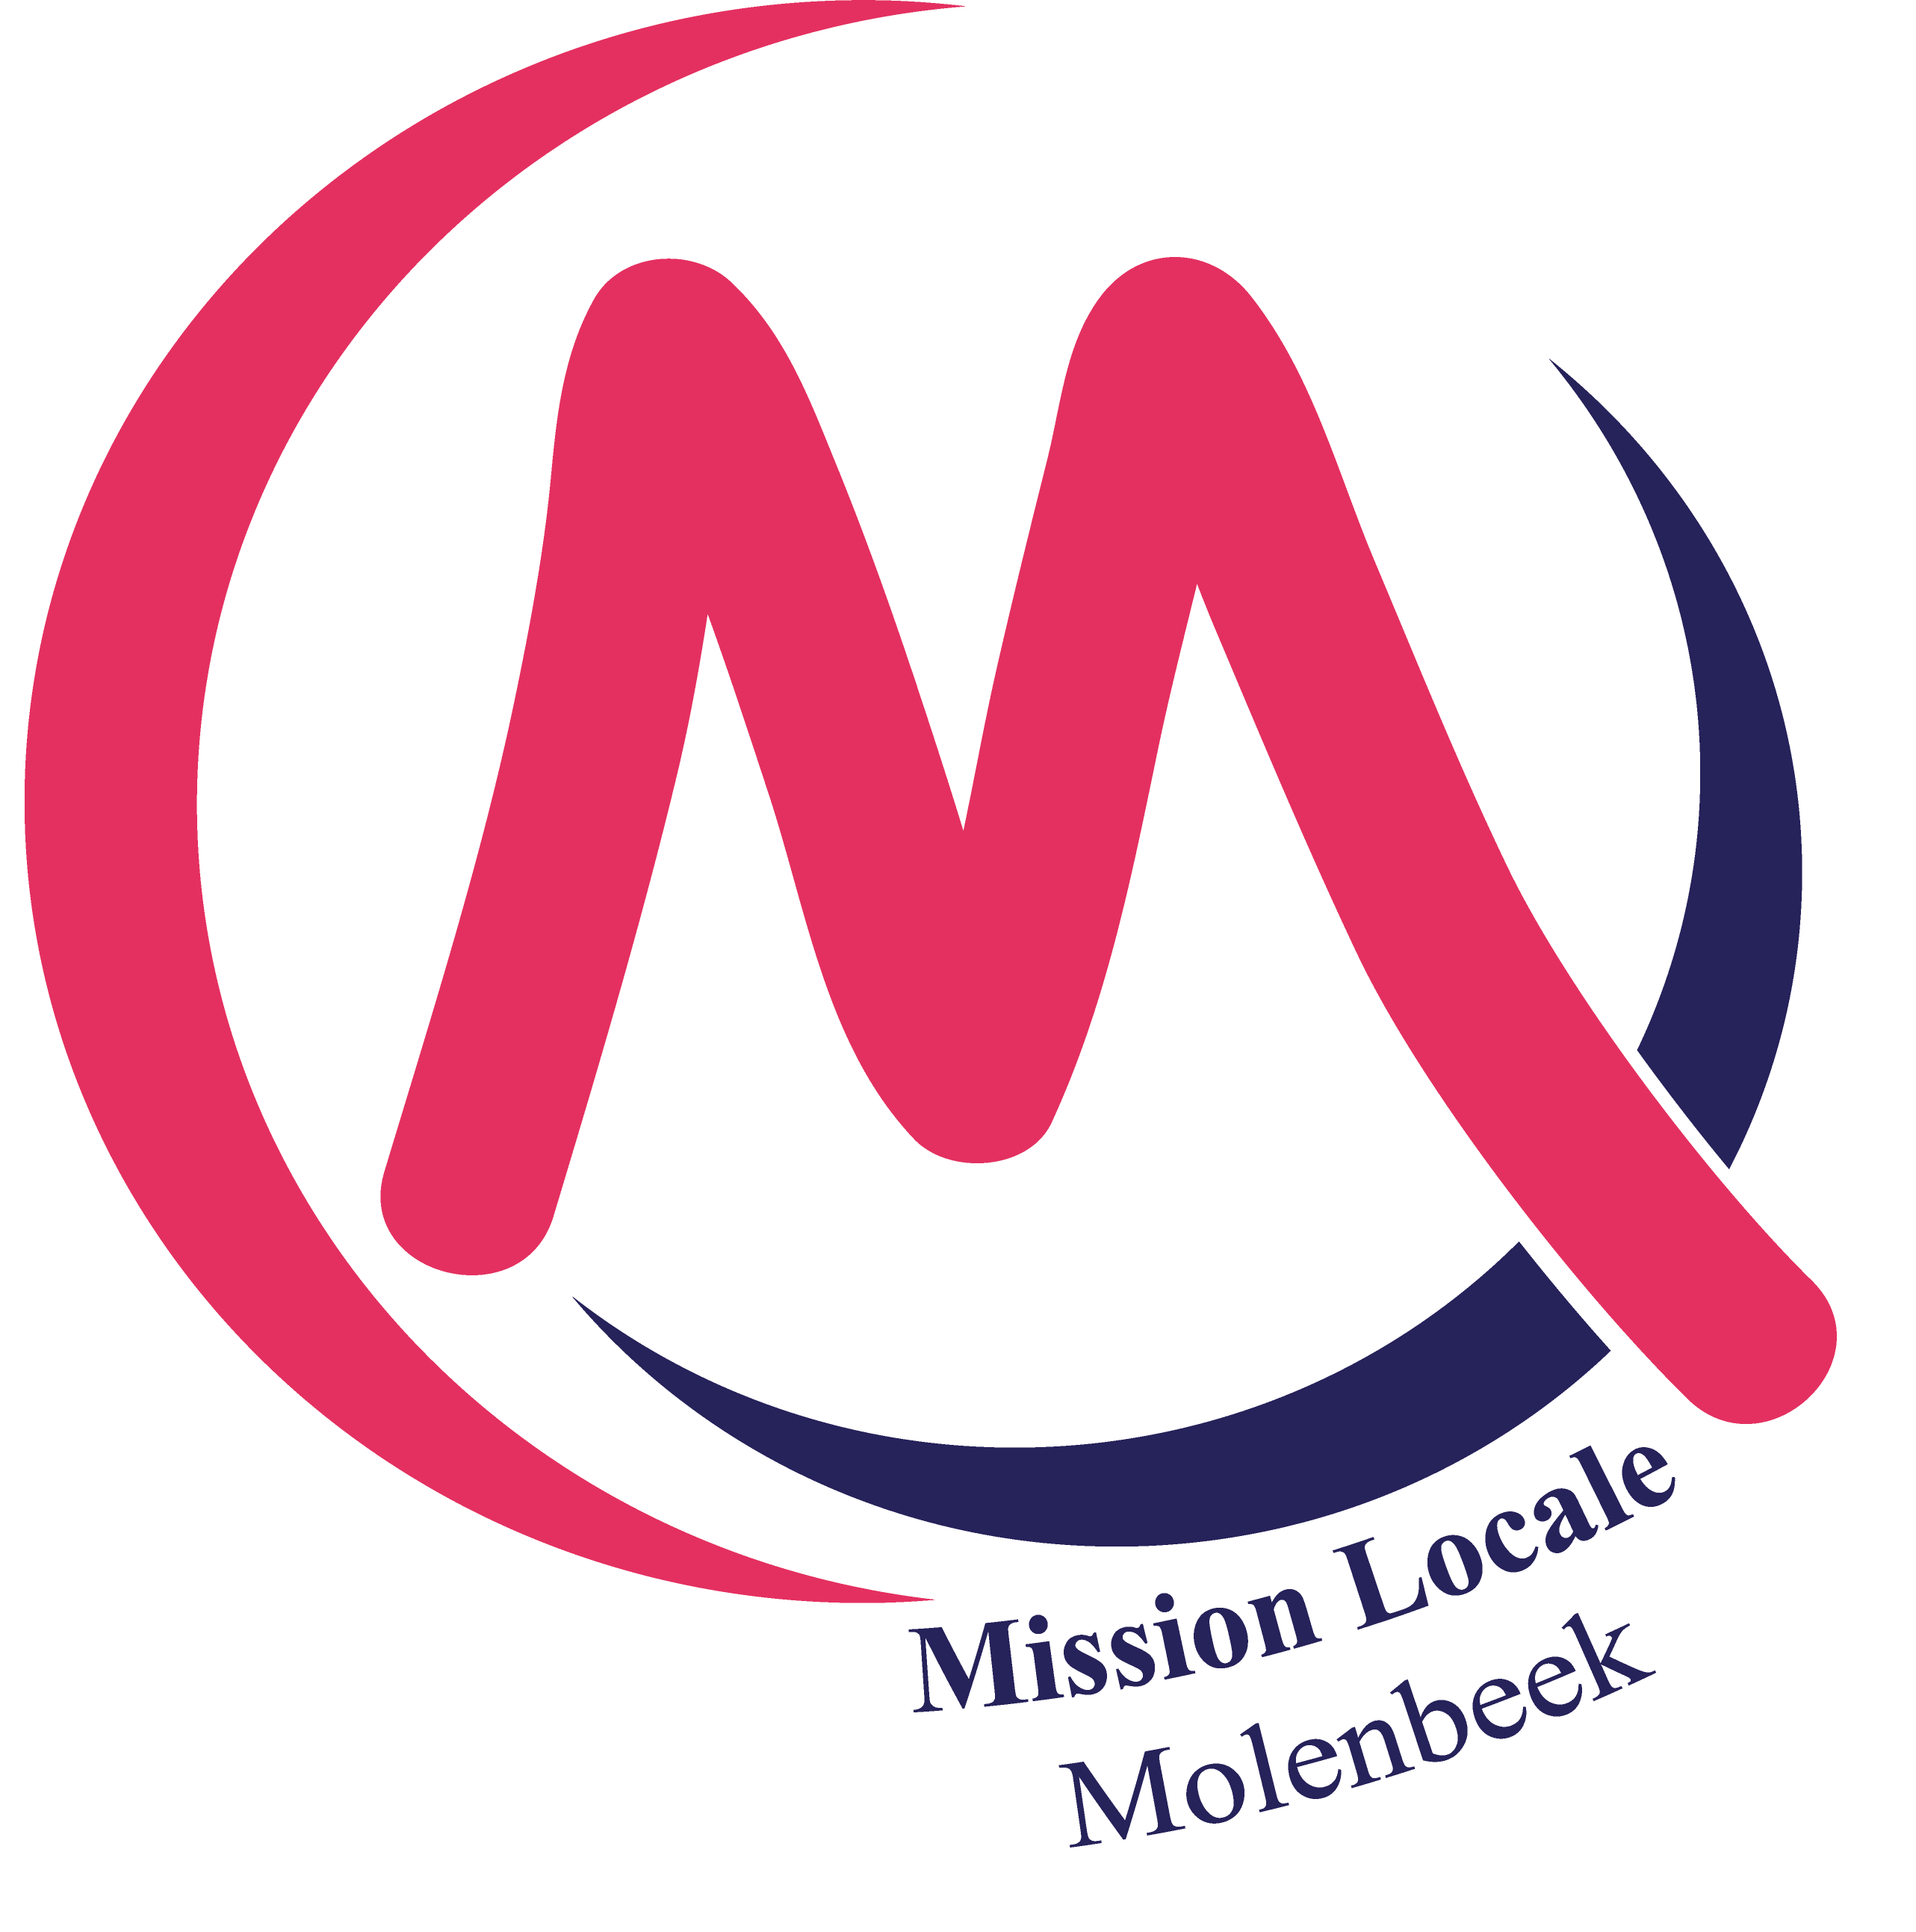 Mission Locale de Molenbeek